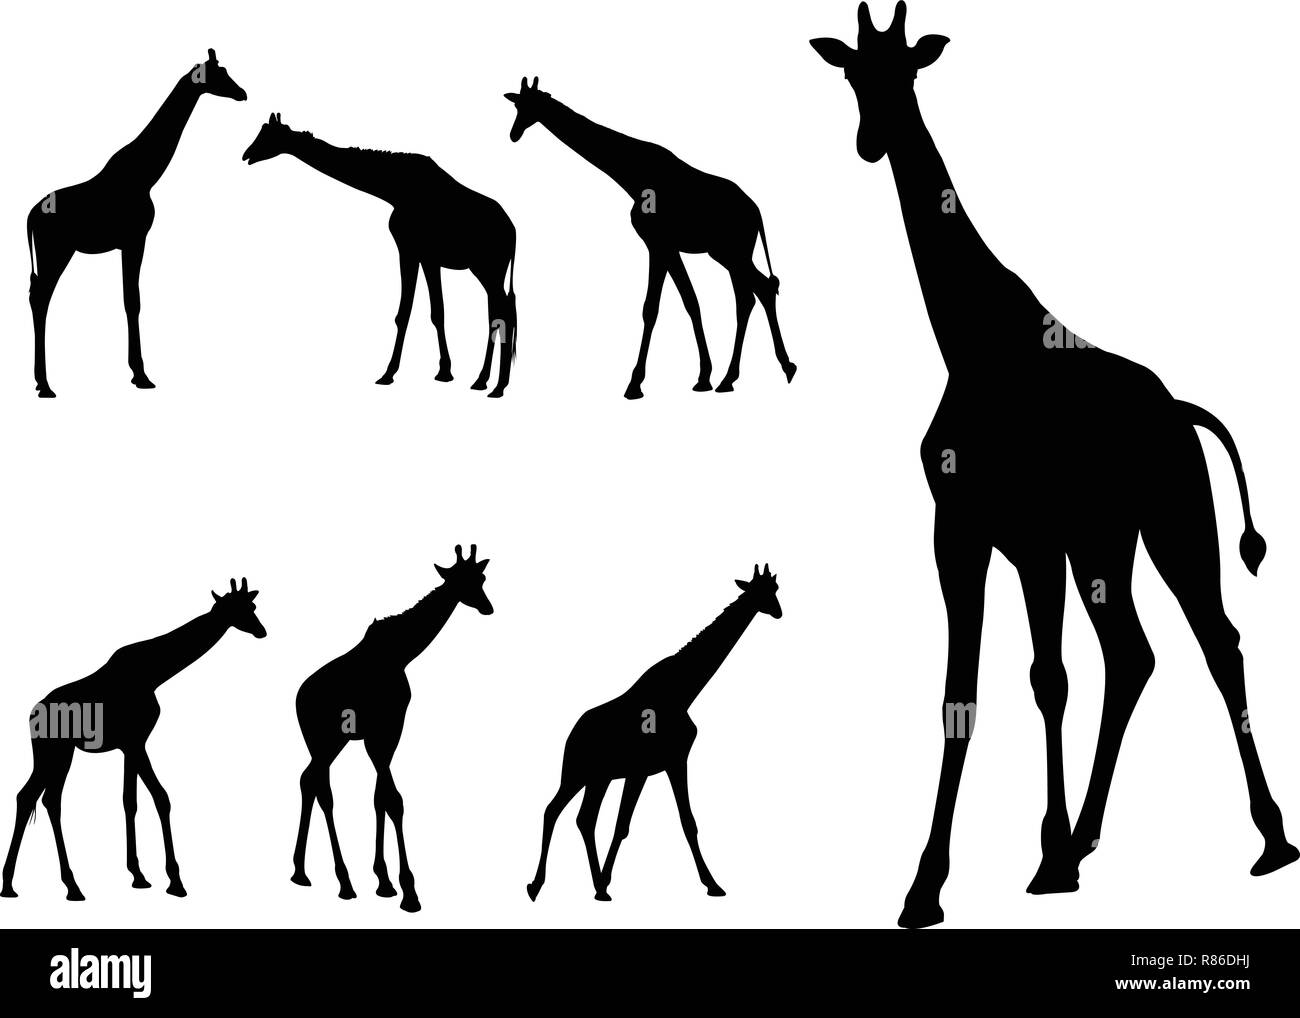 Giraffen Silhouetten Sammlung - Vektor Stock Vektor